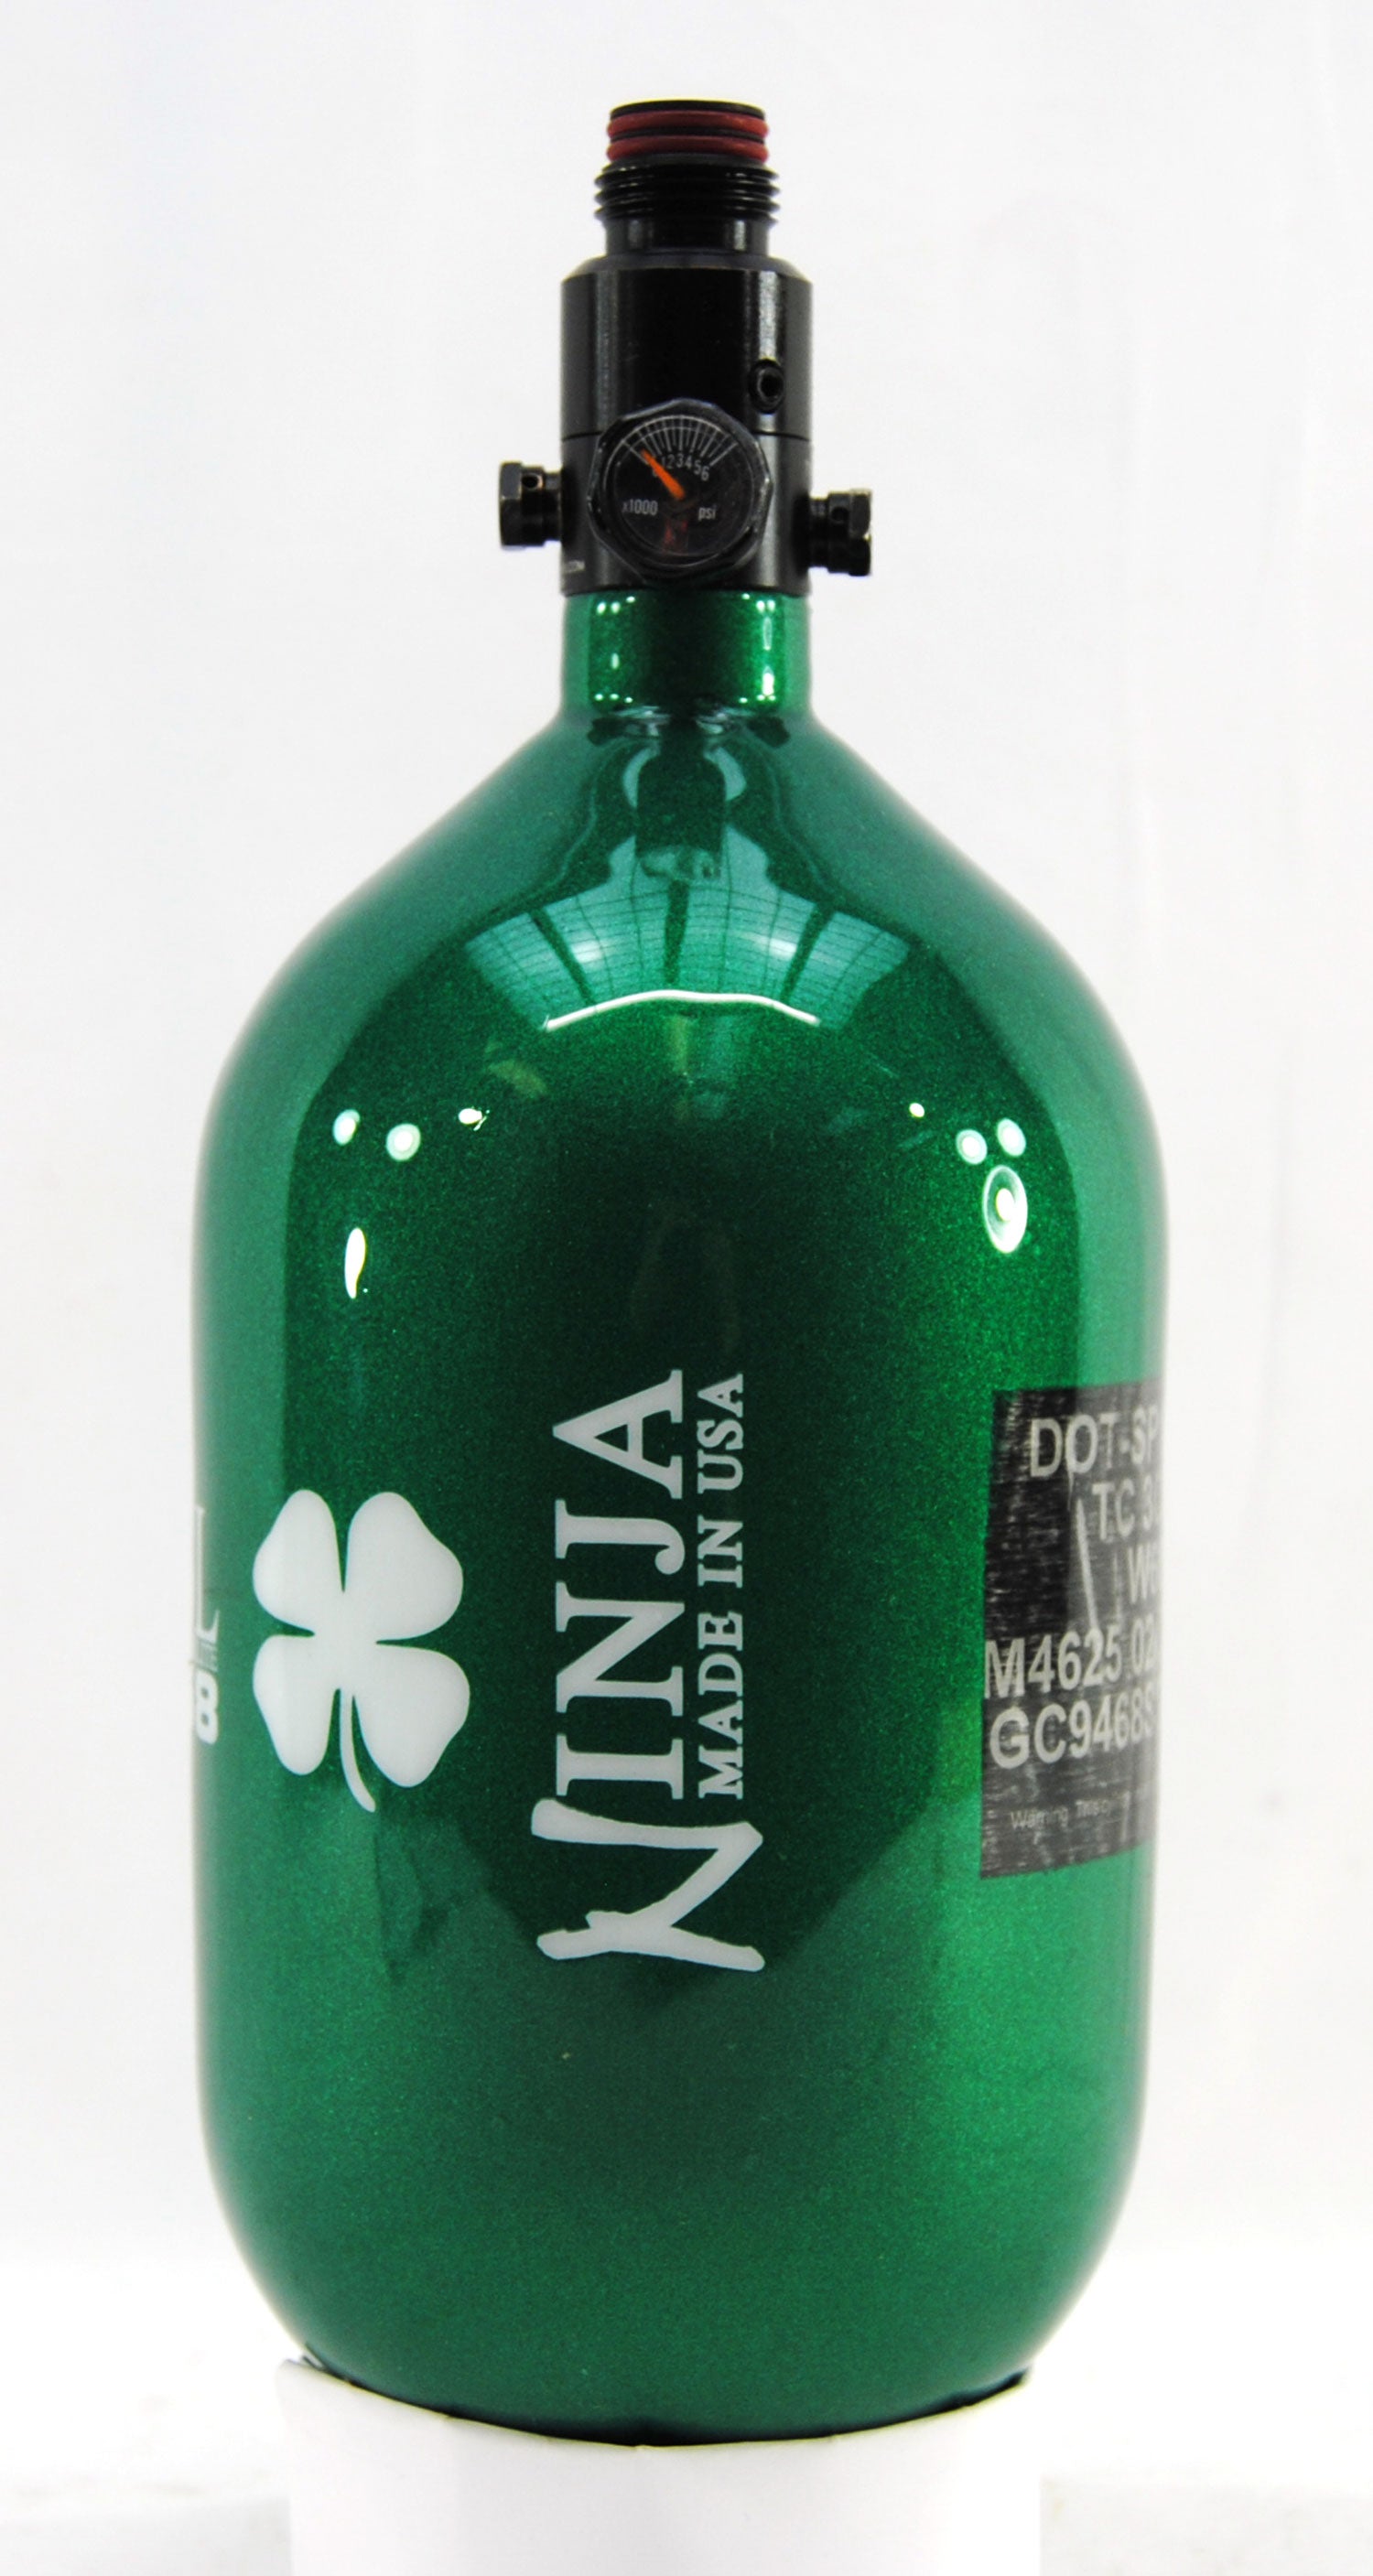 Ninja 68ci 4500psi HPA Tank - Limited Edition St. Patrick's Day Lucky Clover - Ultralite Regulator - Ninja Paintball